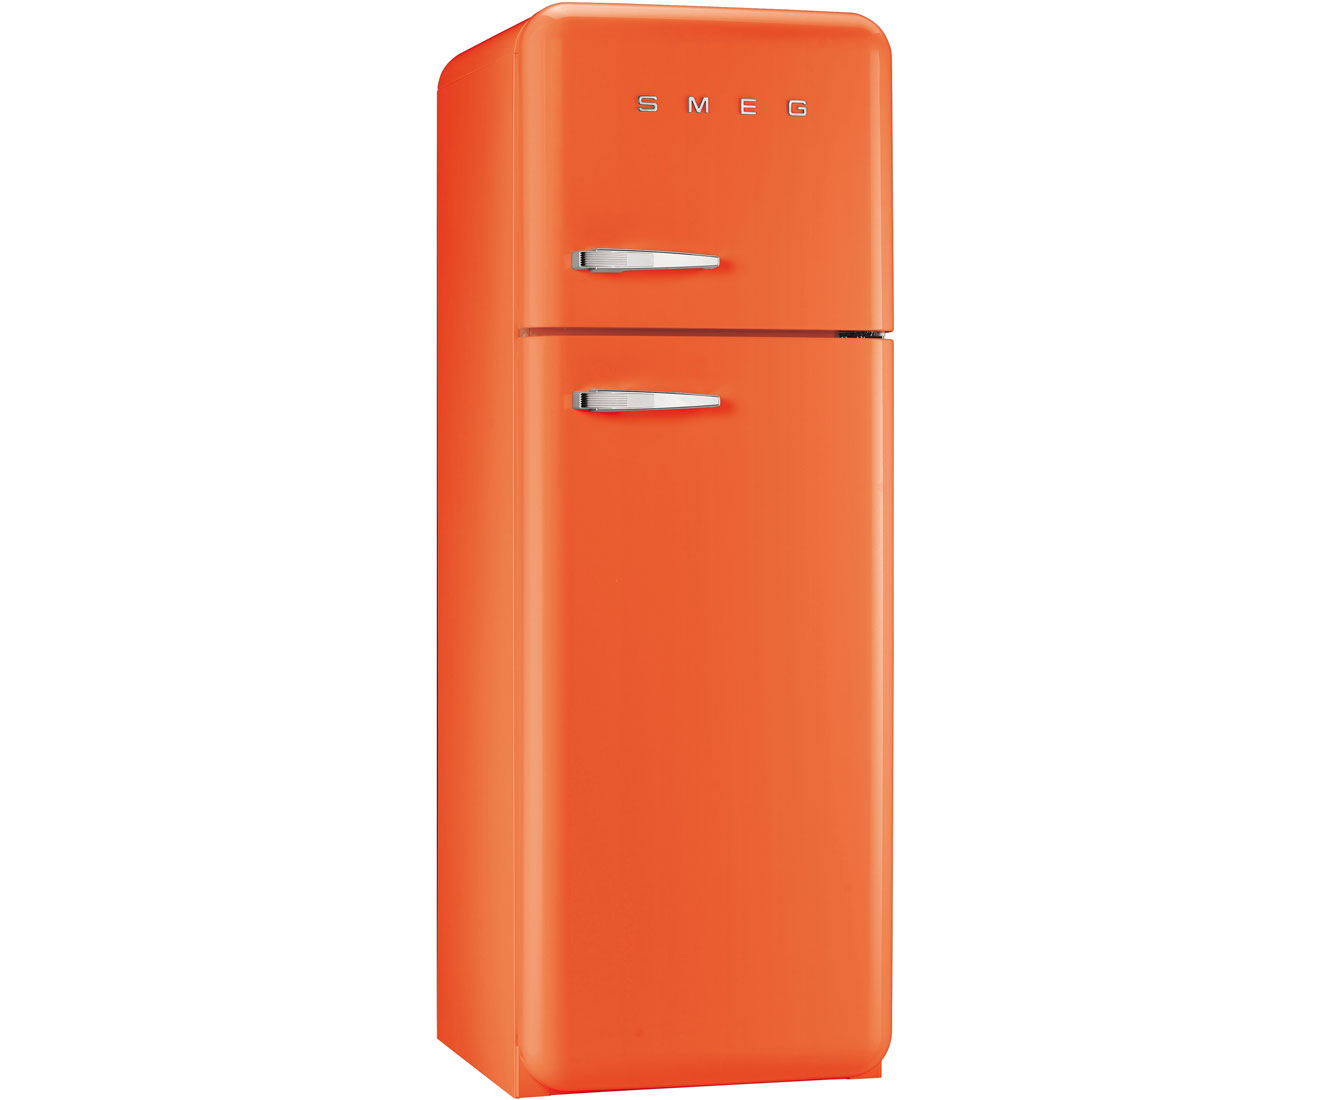 Smeg Right Hand Hinge FAB30RFO Free Standing Fridge Freezer in Orange